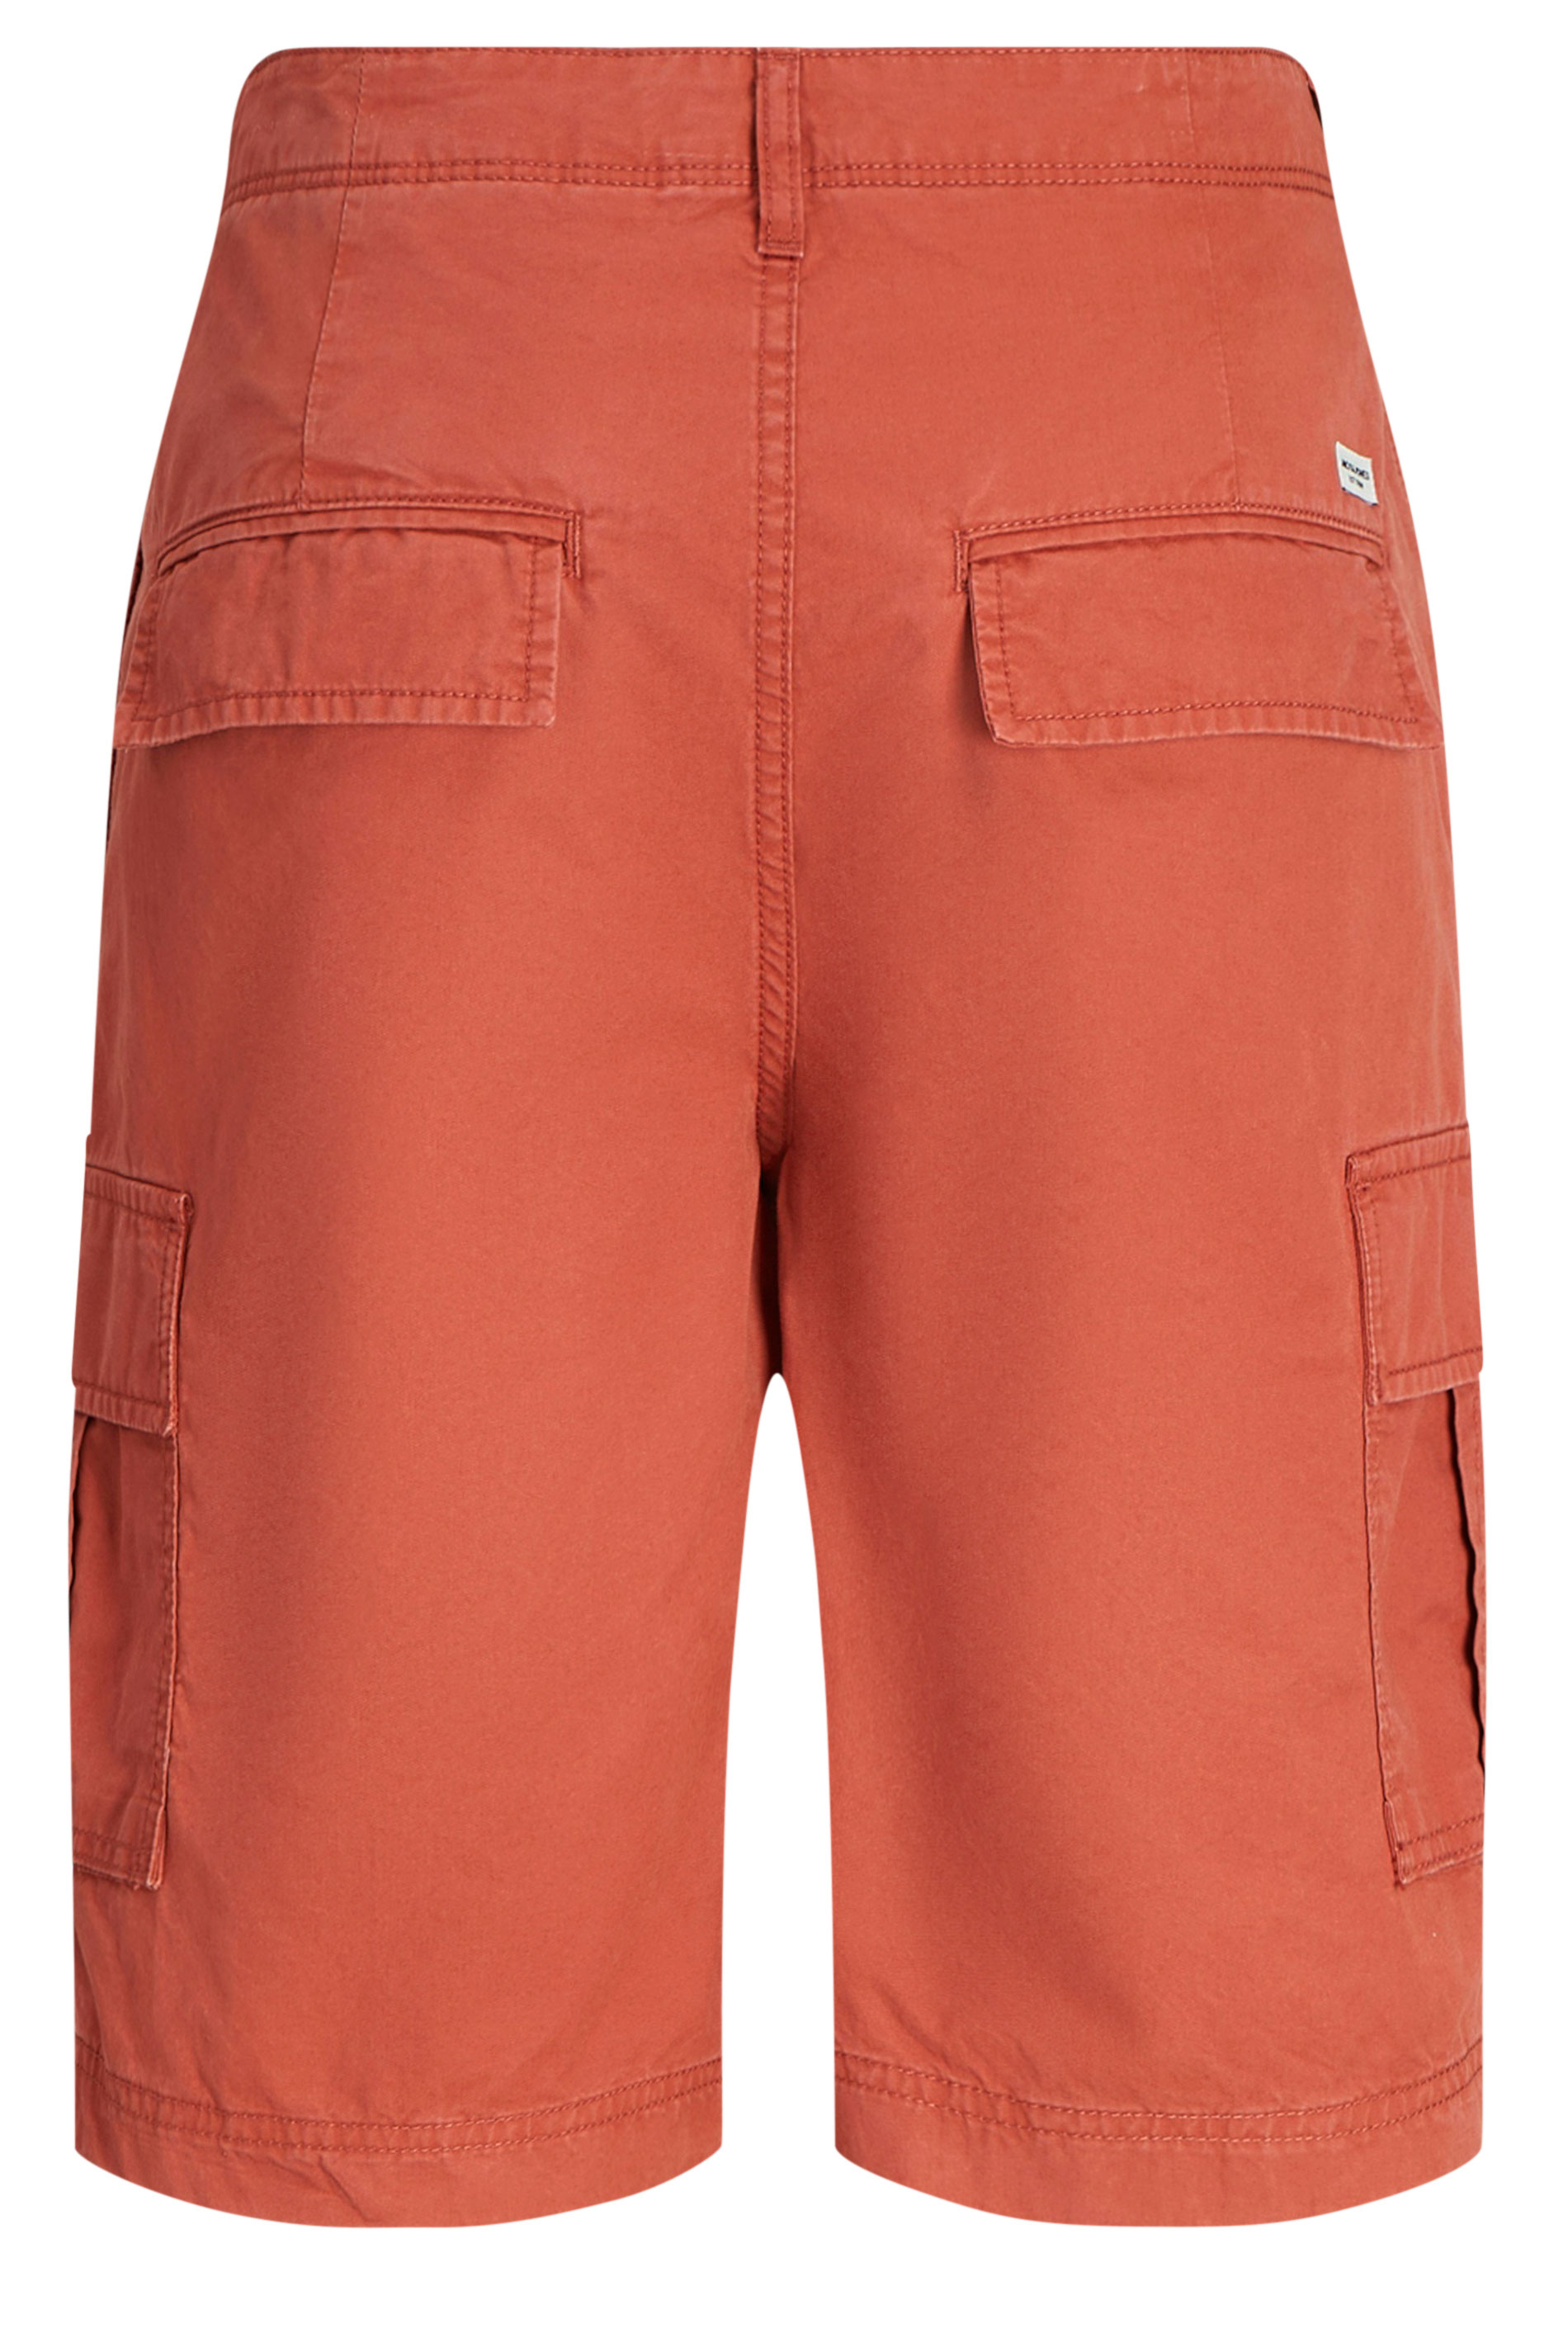 JACK & JONES Big & Tall Orange Cargo Shorts | BadRhino 2